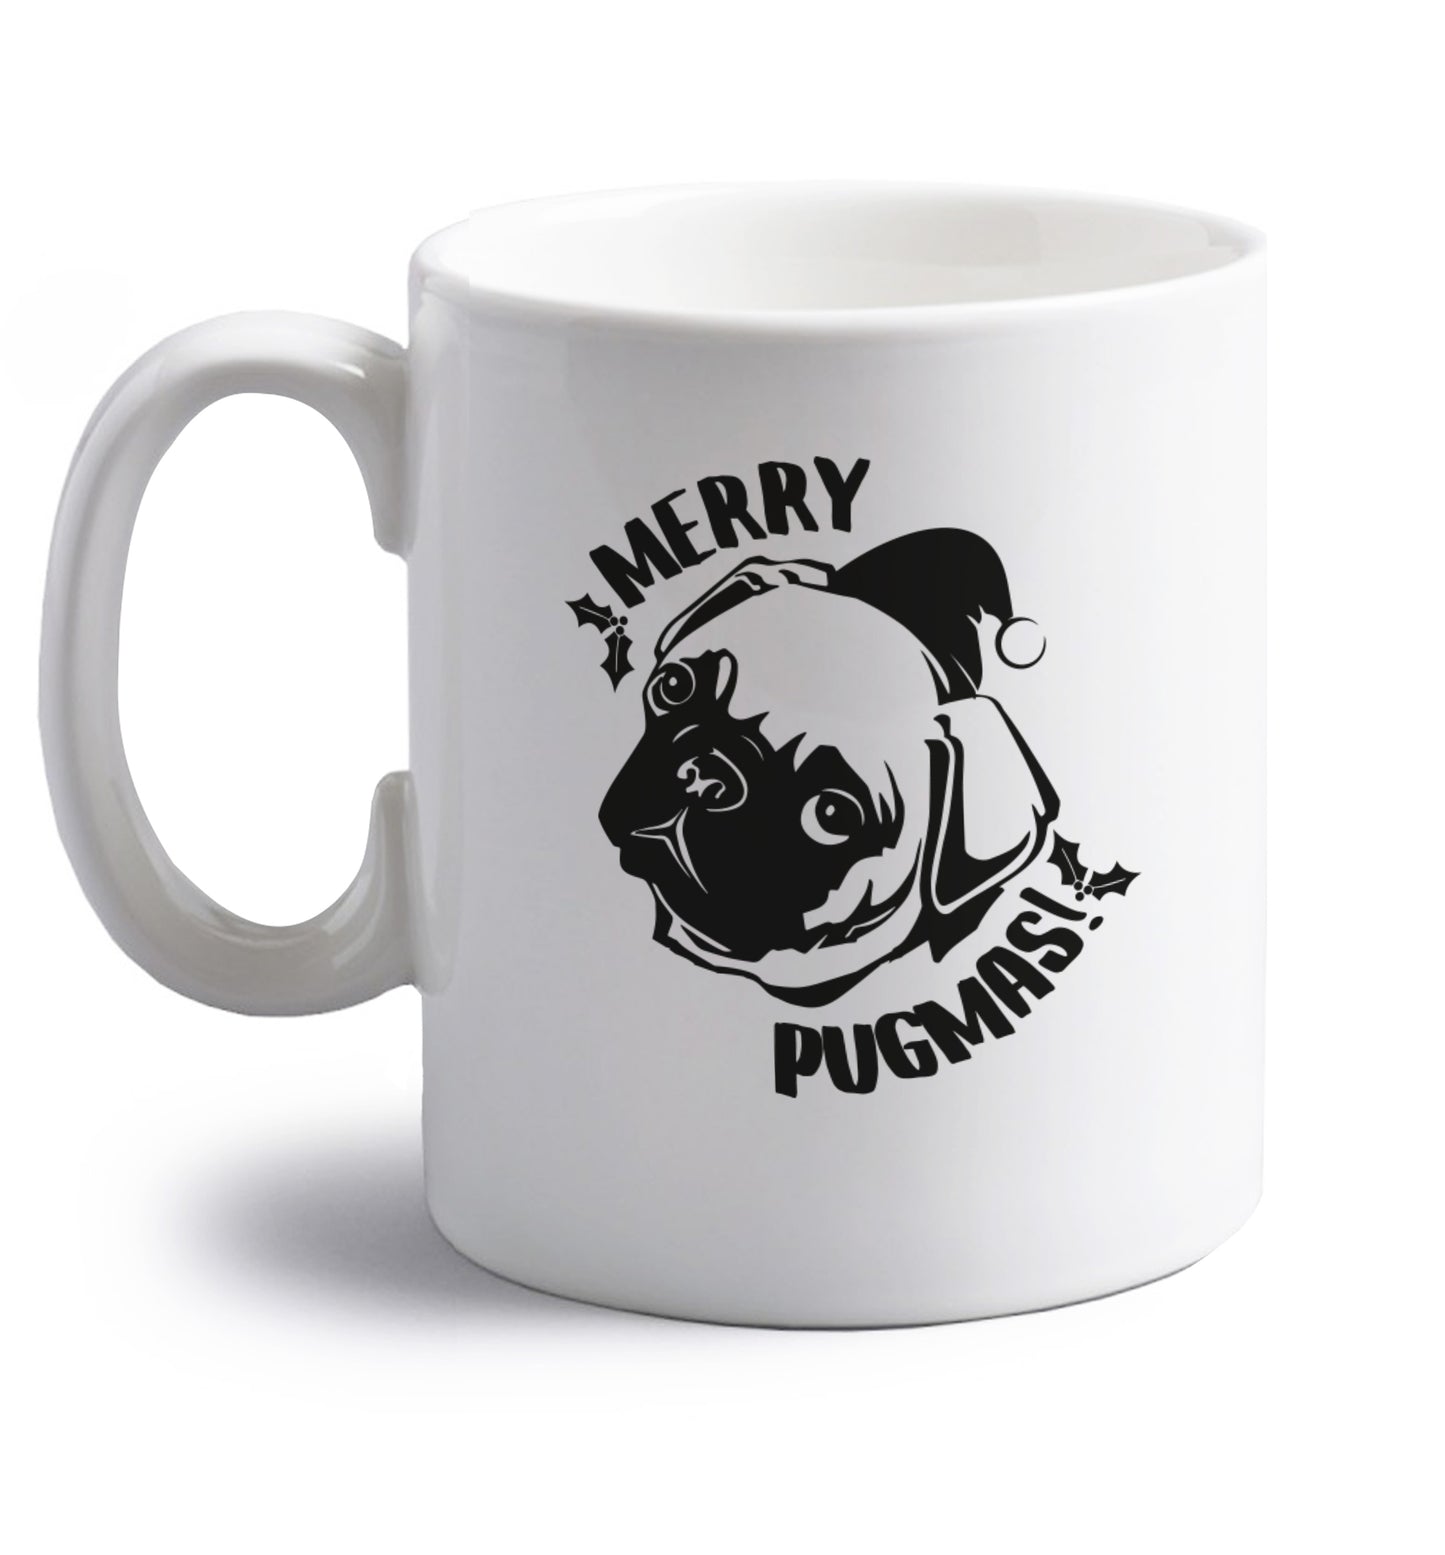 Merry Pugmas right handed white ceramic mug 